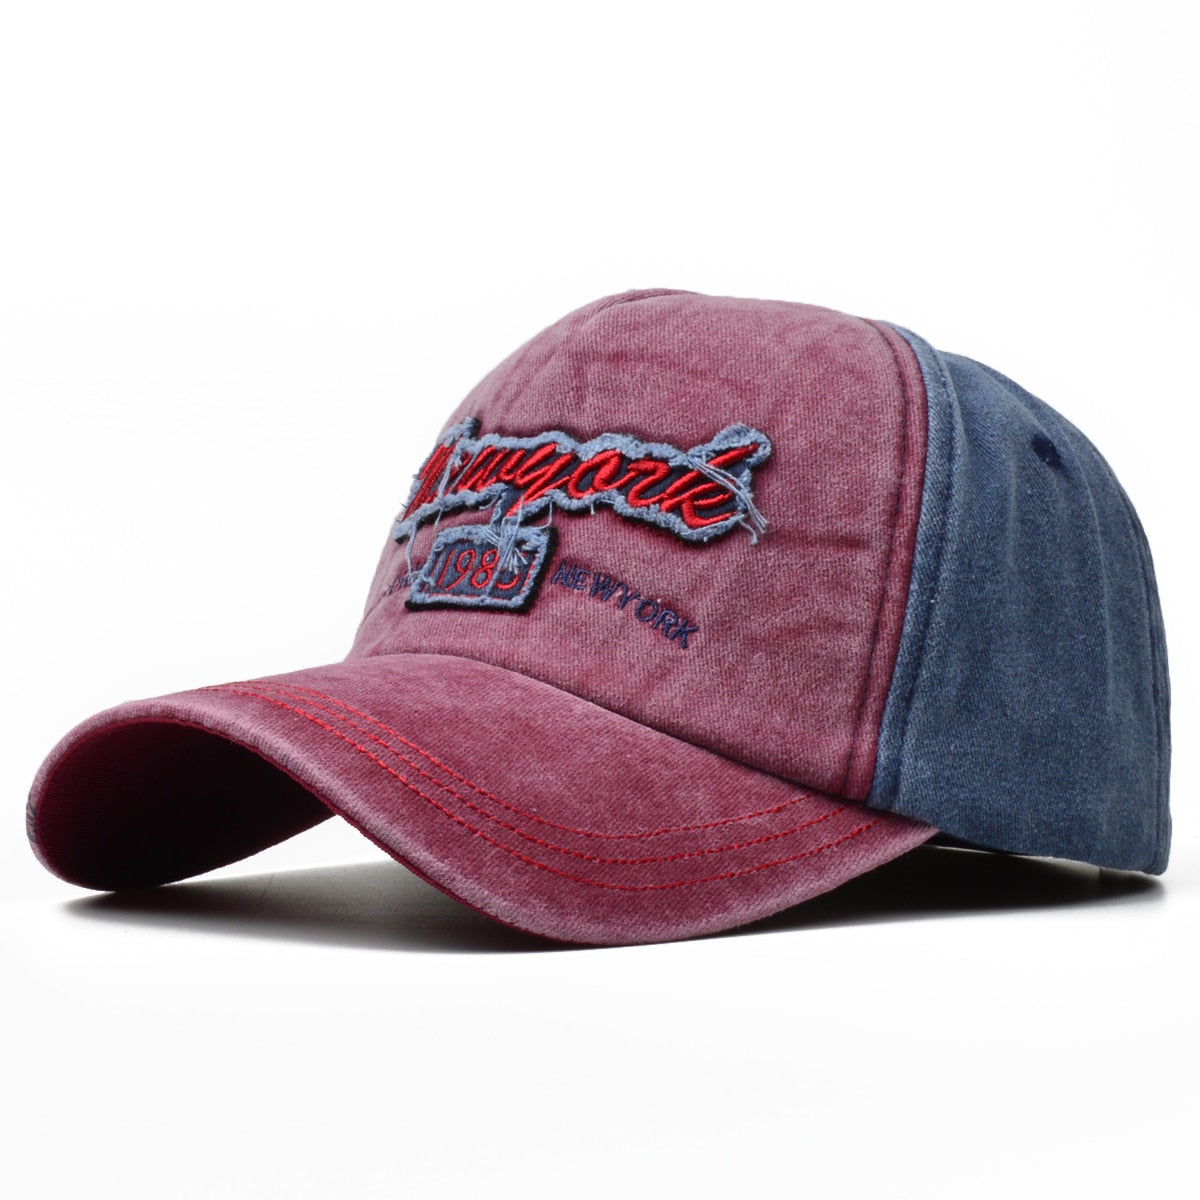 All Cotton Men's Baseball Cap Fashion Women's Dad Hat Embroidery Pattern Adjustable Snapback Outdoor Bone Trucker Hats